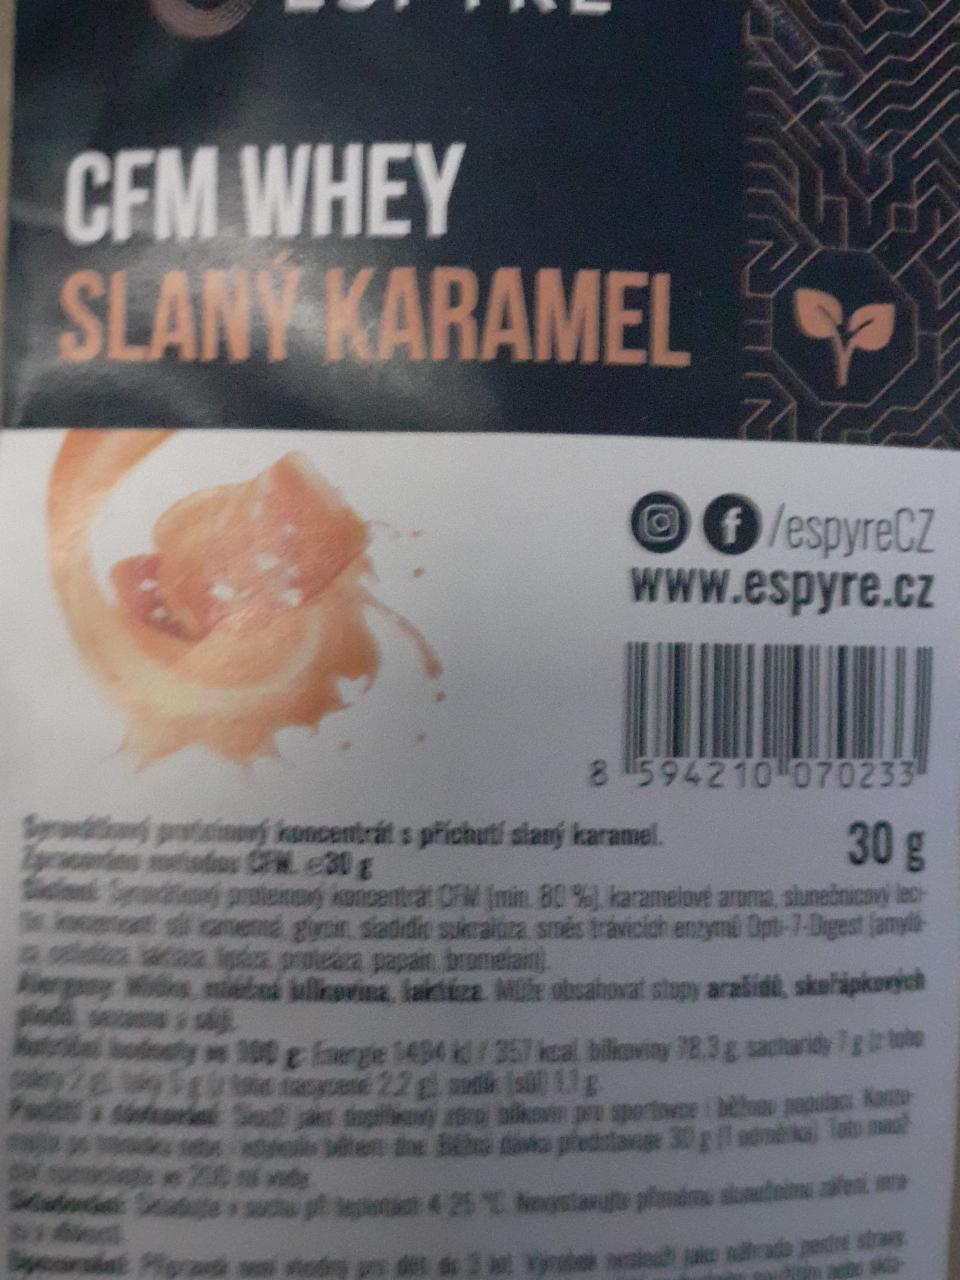 Fotografie - CFM Whey protein Slaný karamel Espyre